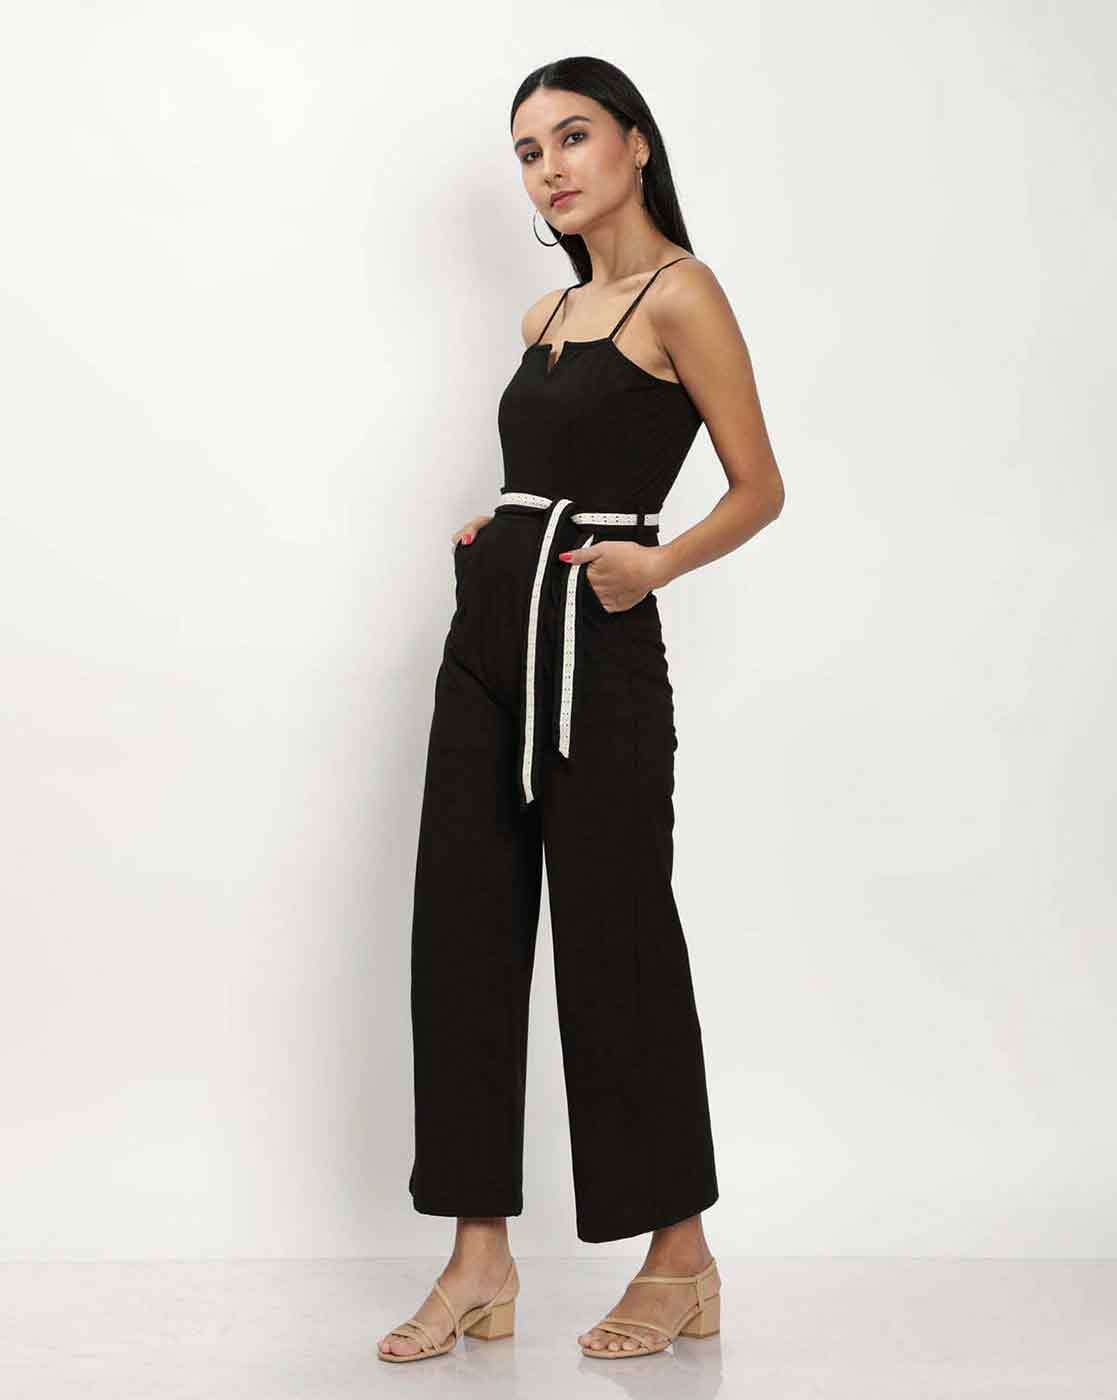 Buy DGG7 Women Latest Fashion Design Fashion Print Sleeveless ONeck  Jumpsuits Lady Loose Playsuit TrousersBlackS at Amazonin